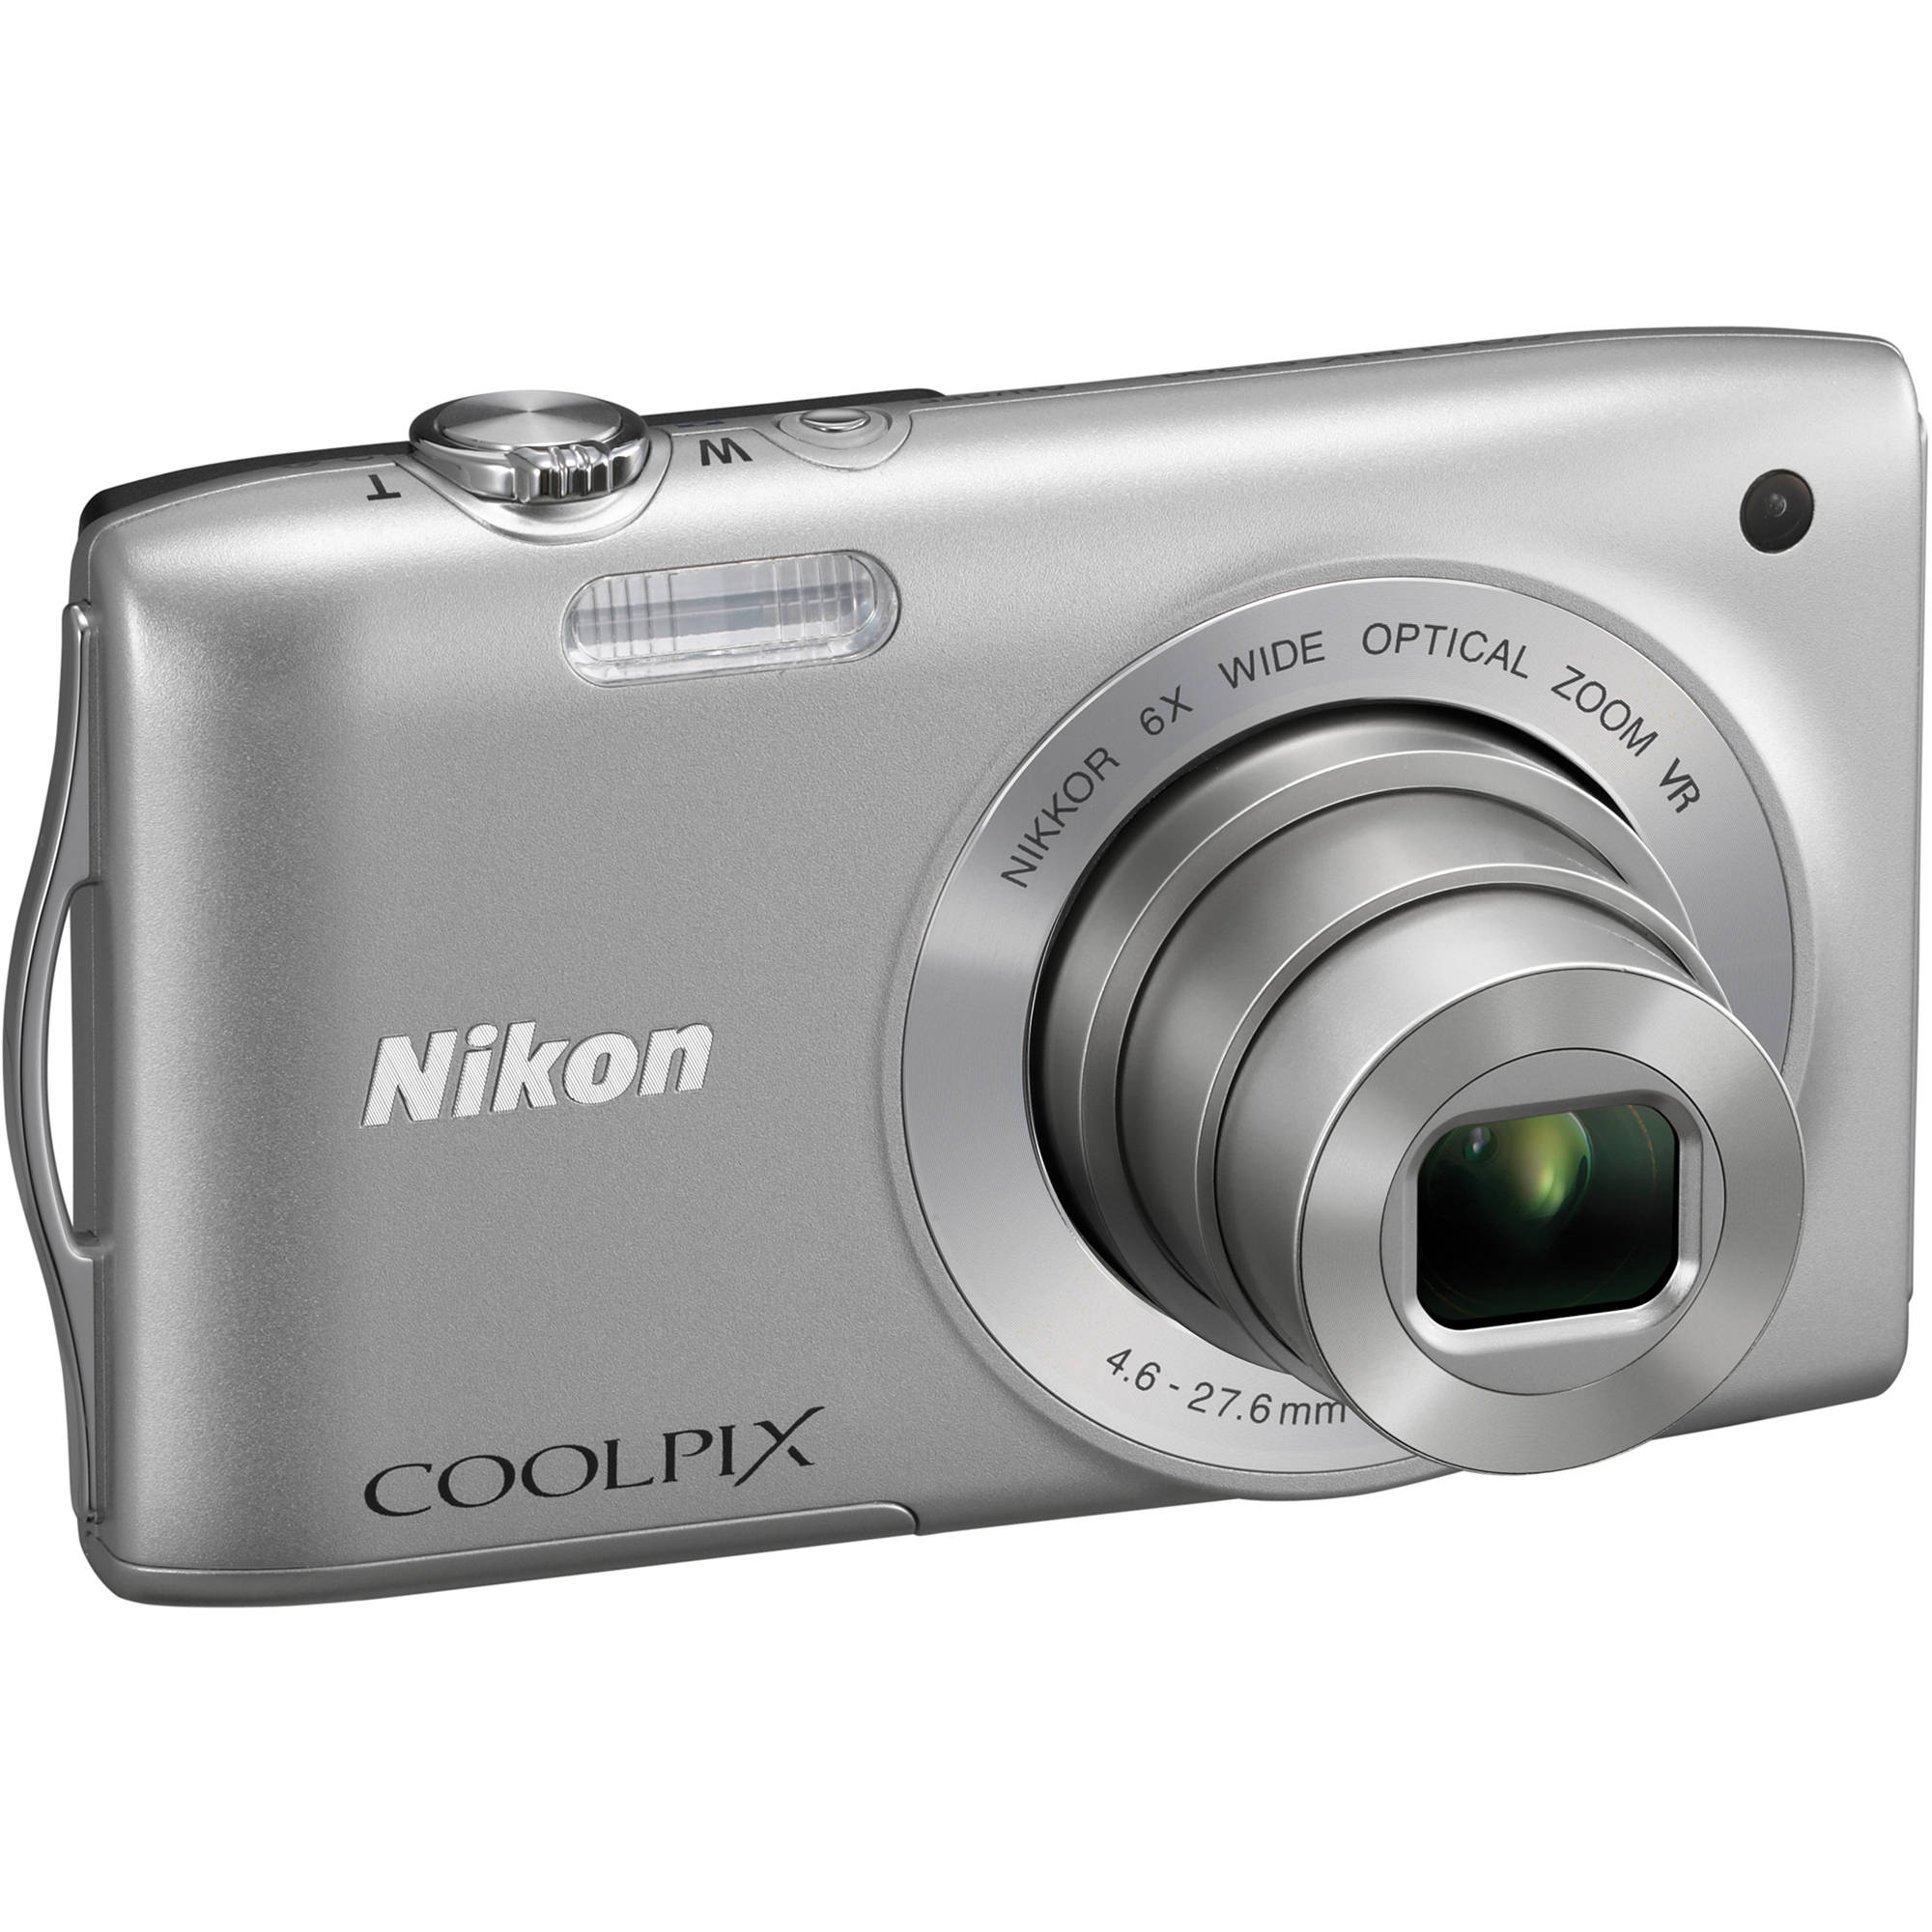 Download Photos From Nikon To Mac